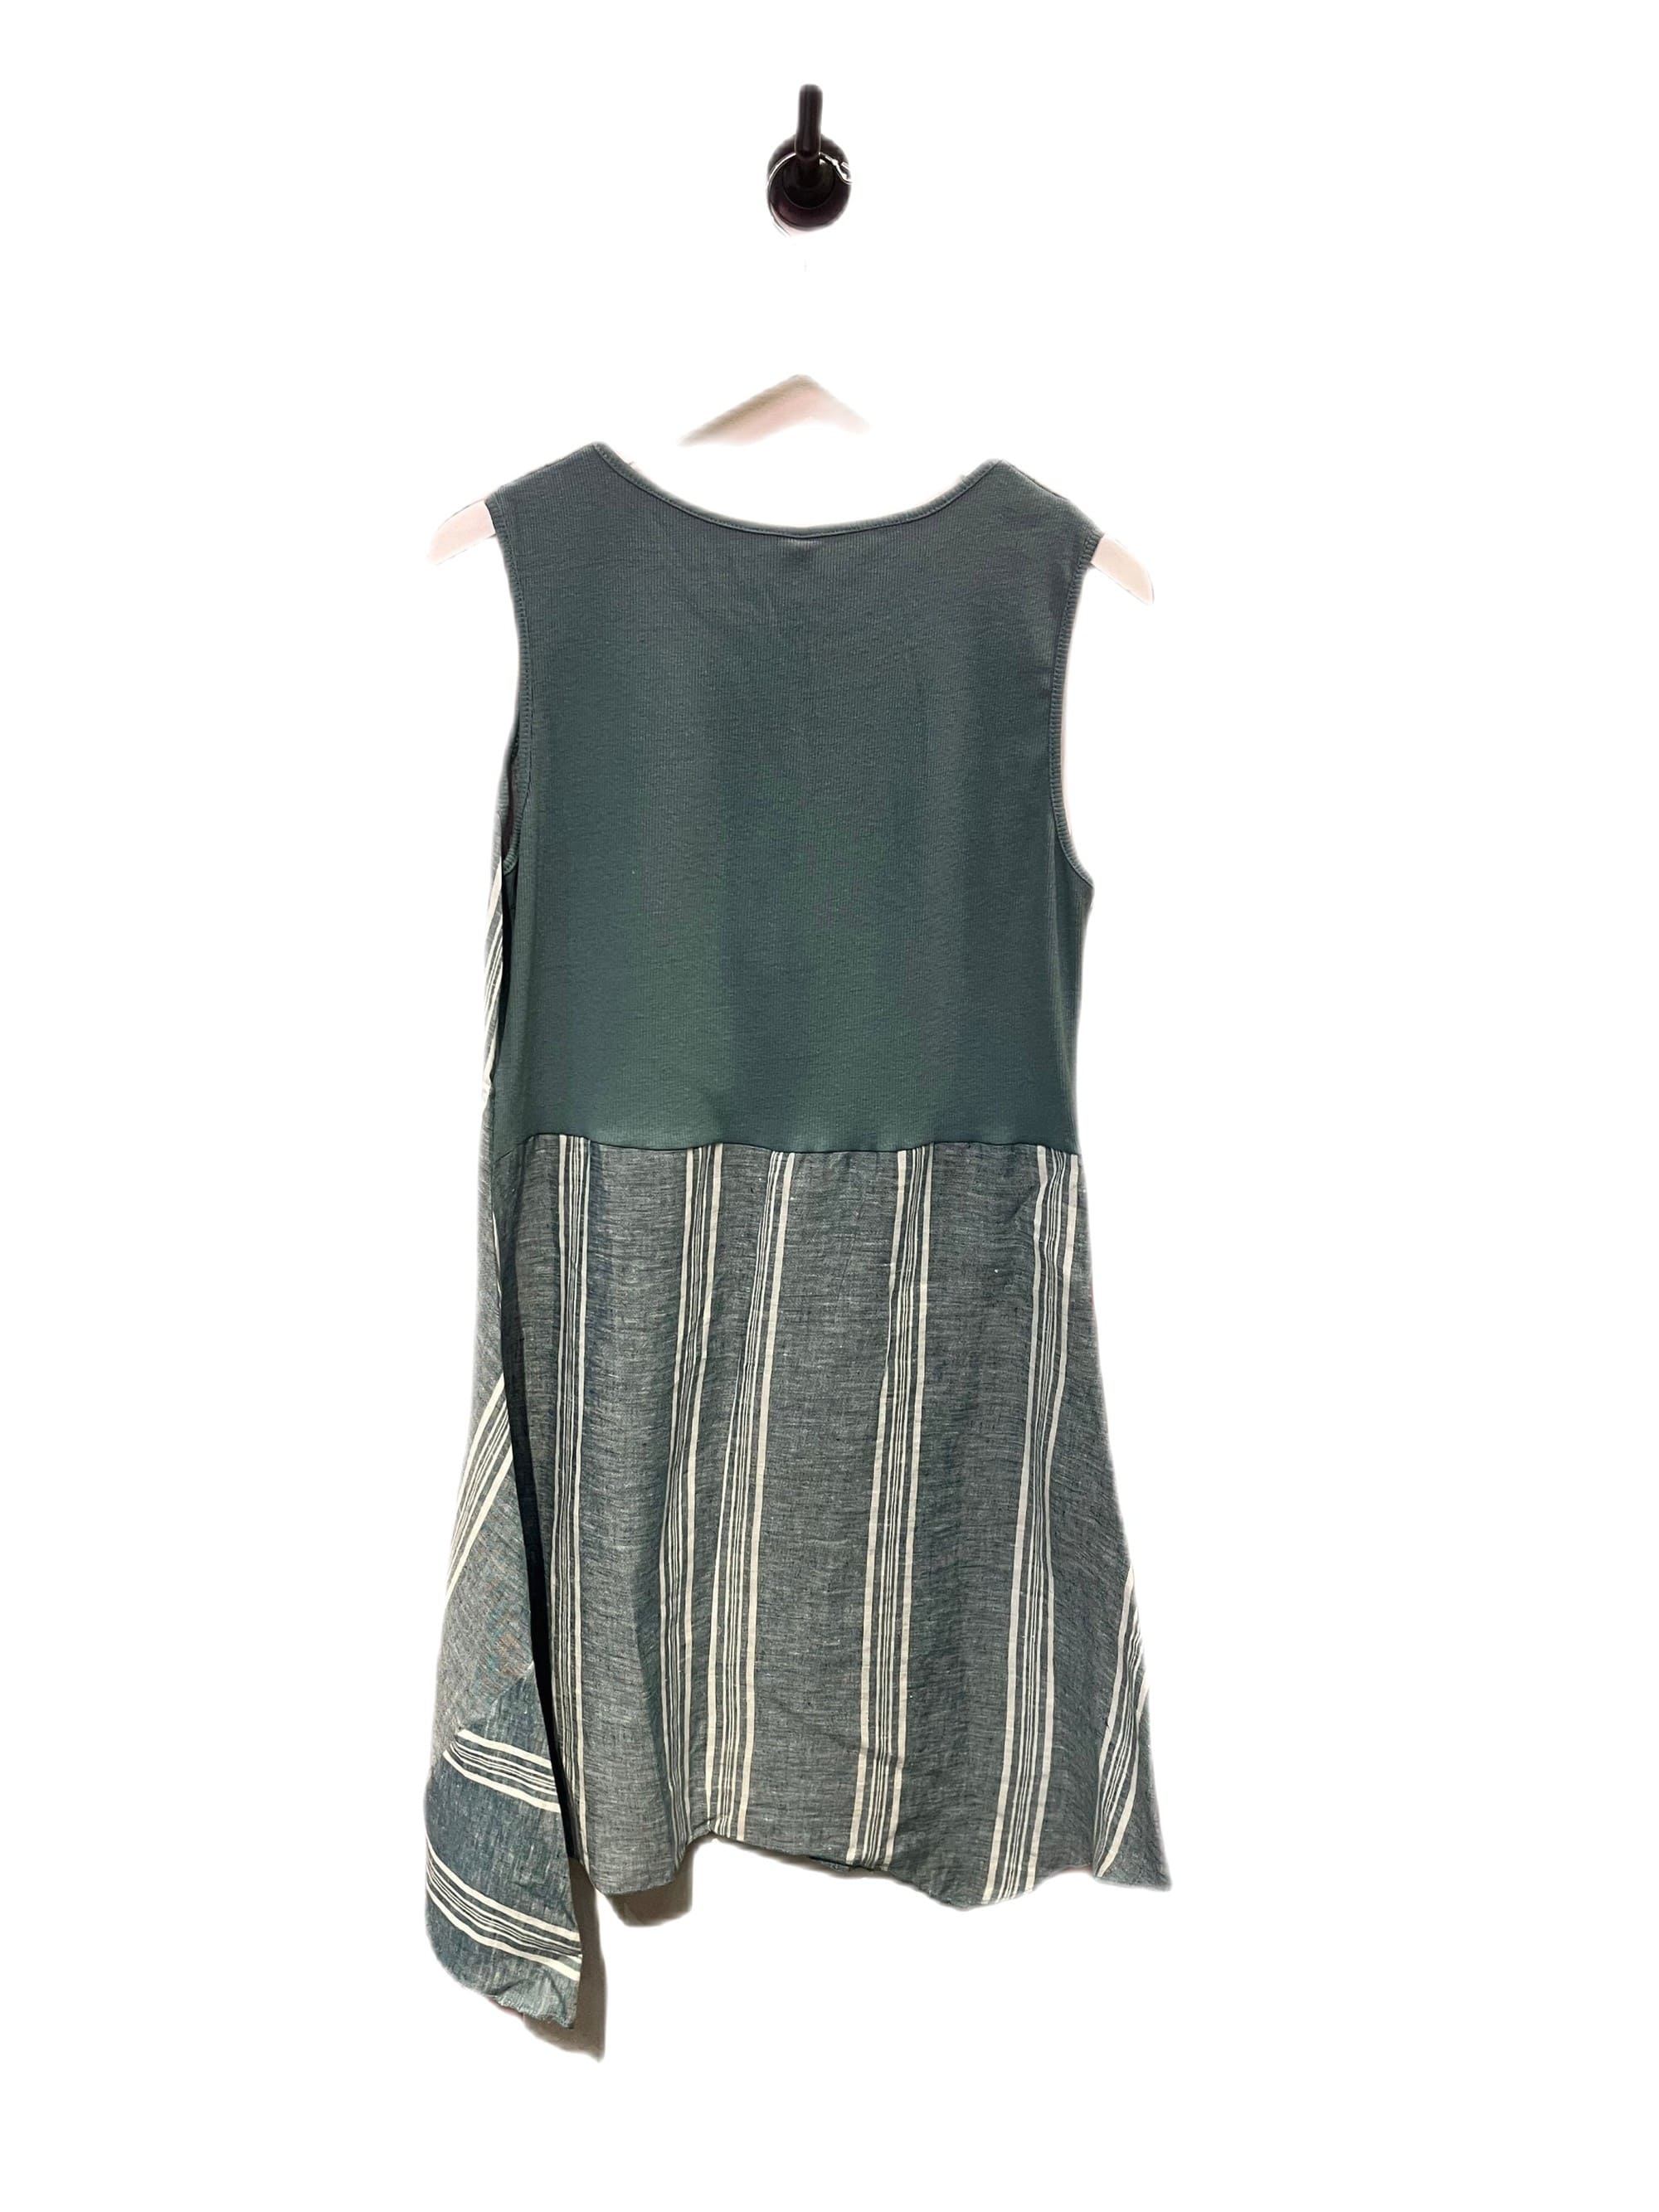 Inizio Linen Dress with Pockets in Sea Foam - clever alice